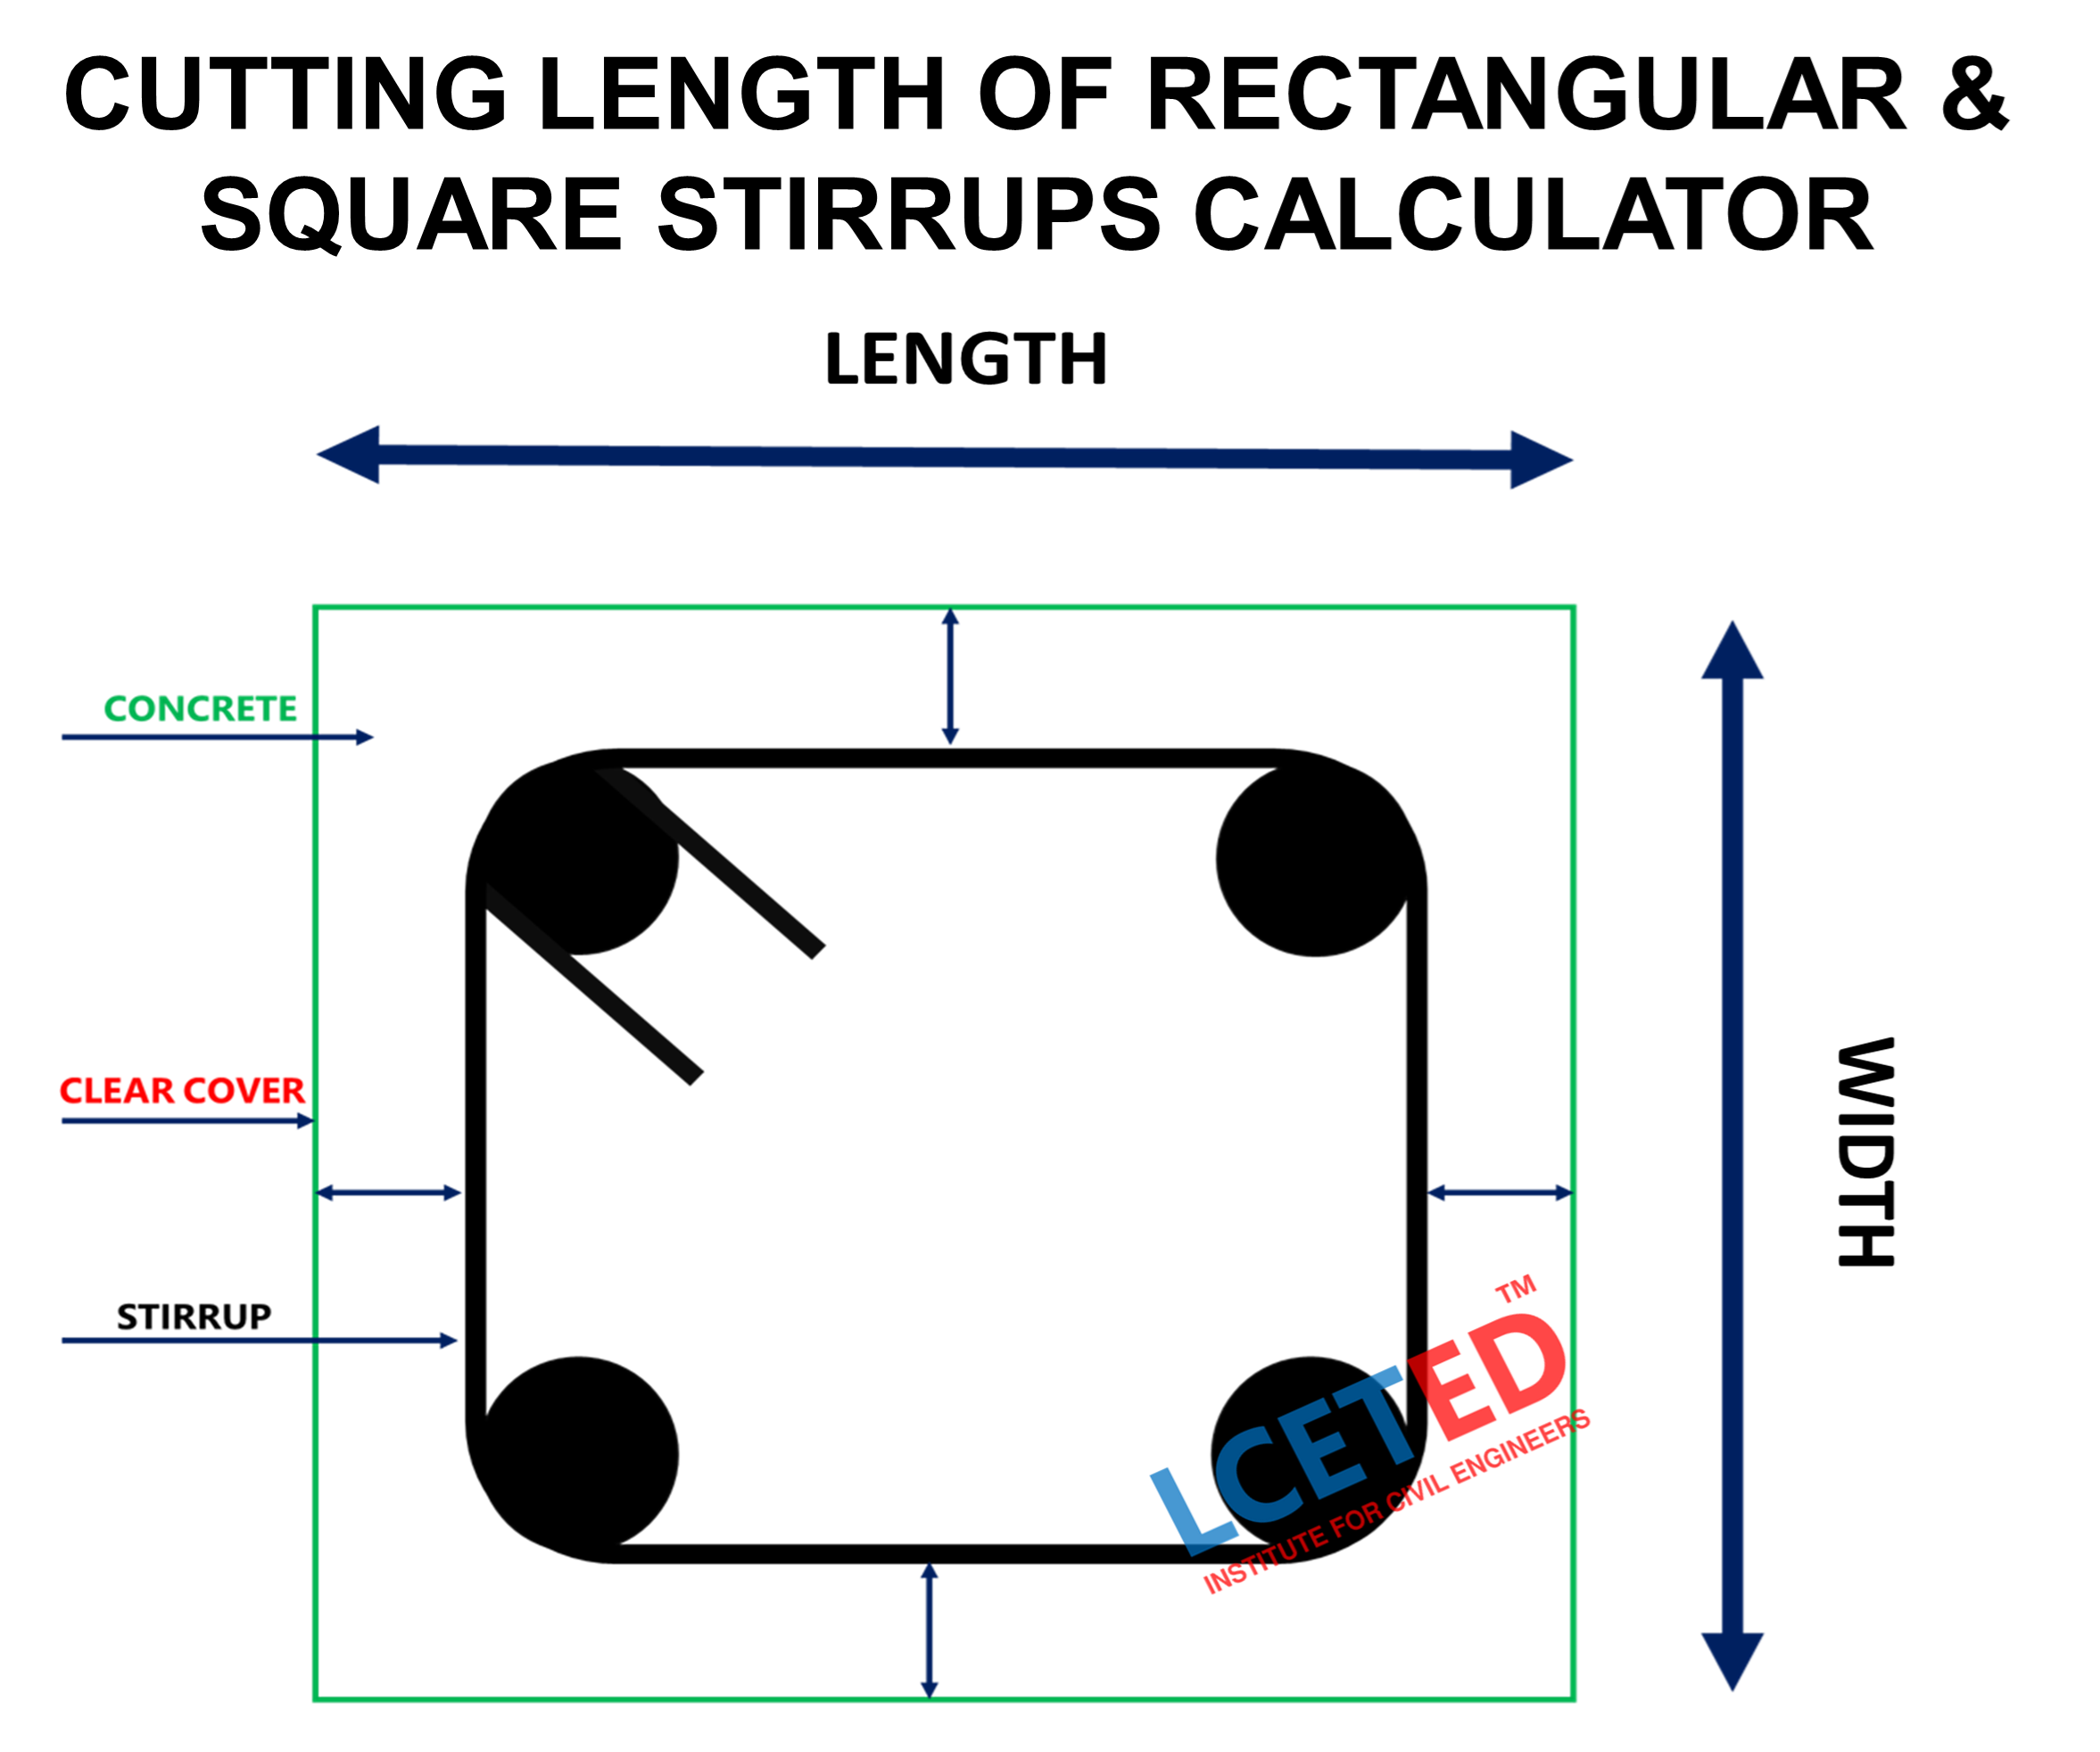 Cutting Length of Rectangular & Square Stirrups Calculator